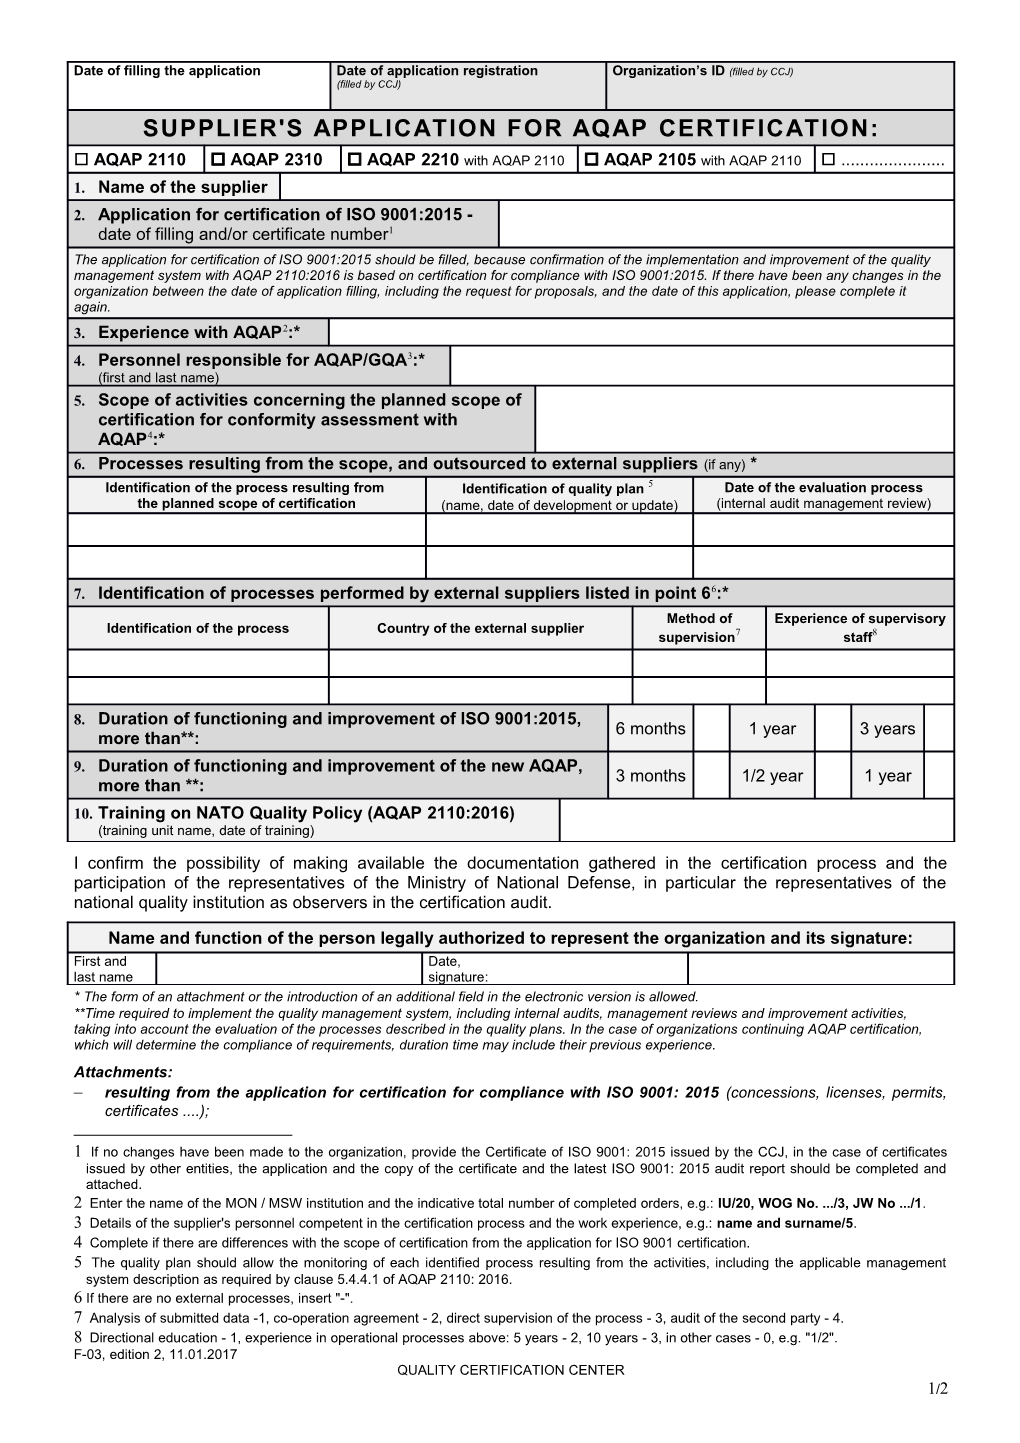 Supplier's Application for Aqap Certification